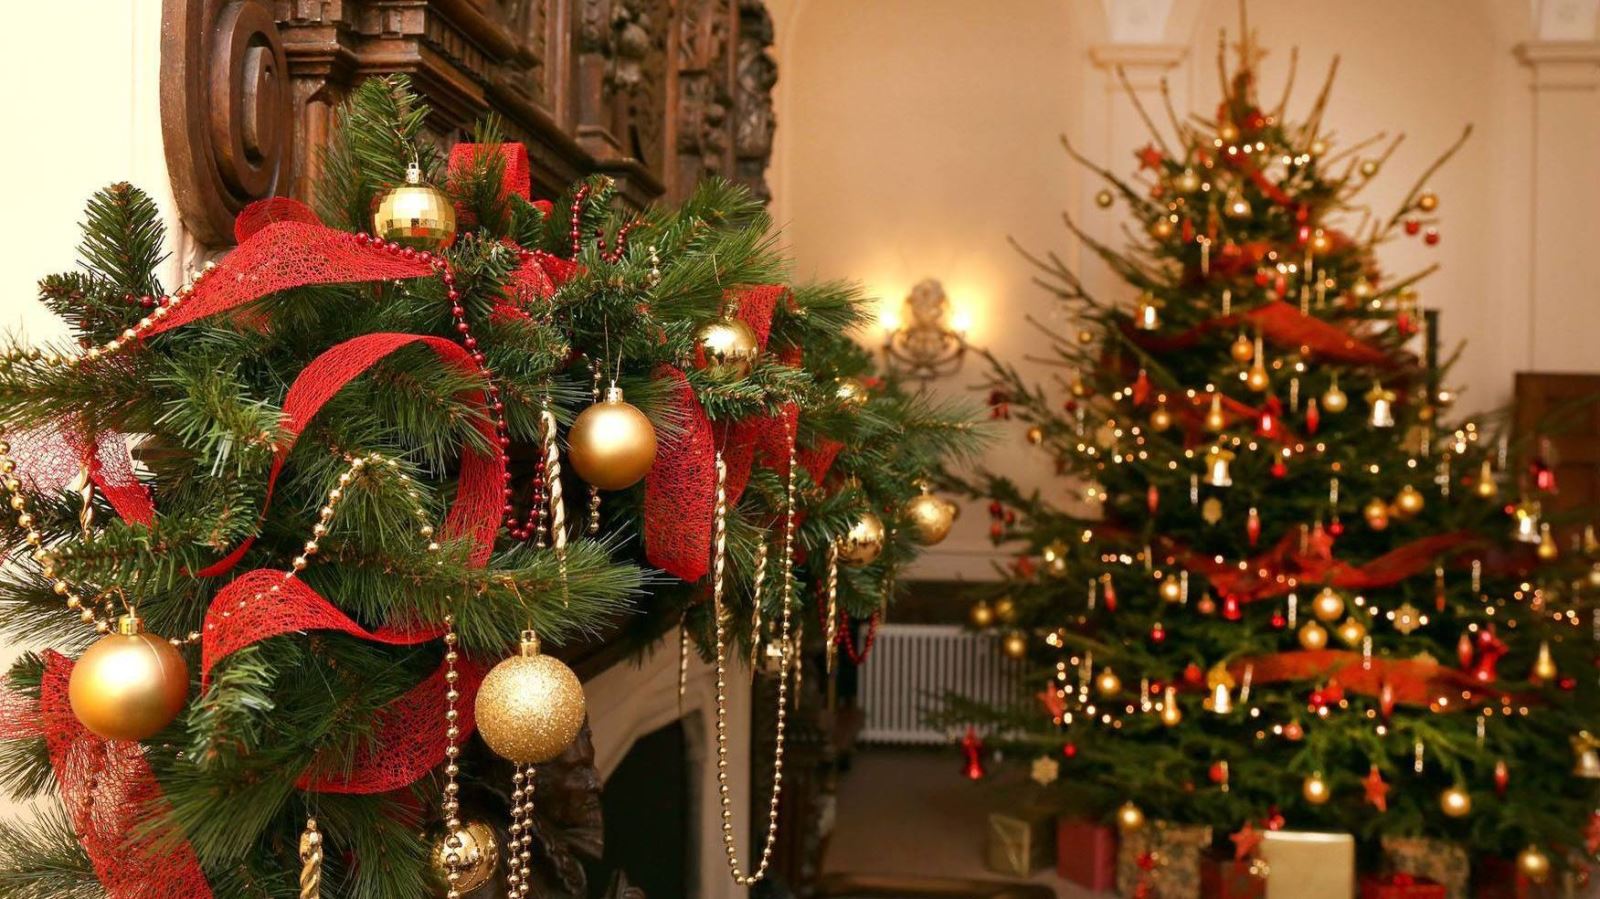 Christmas wreath and tree